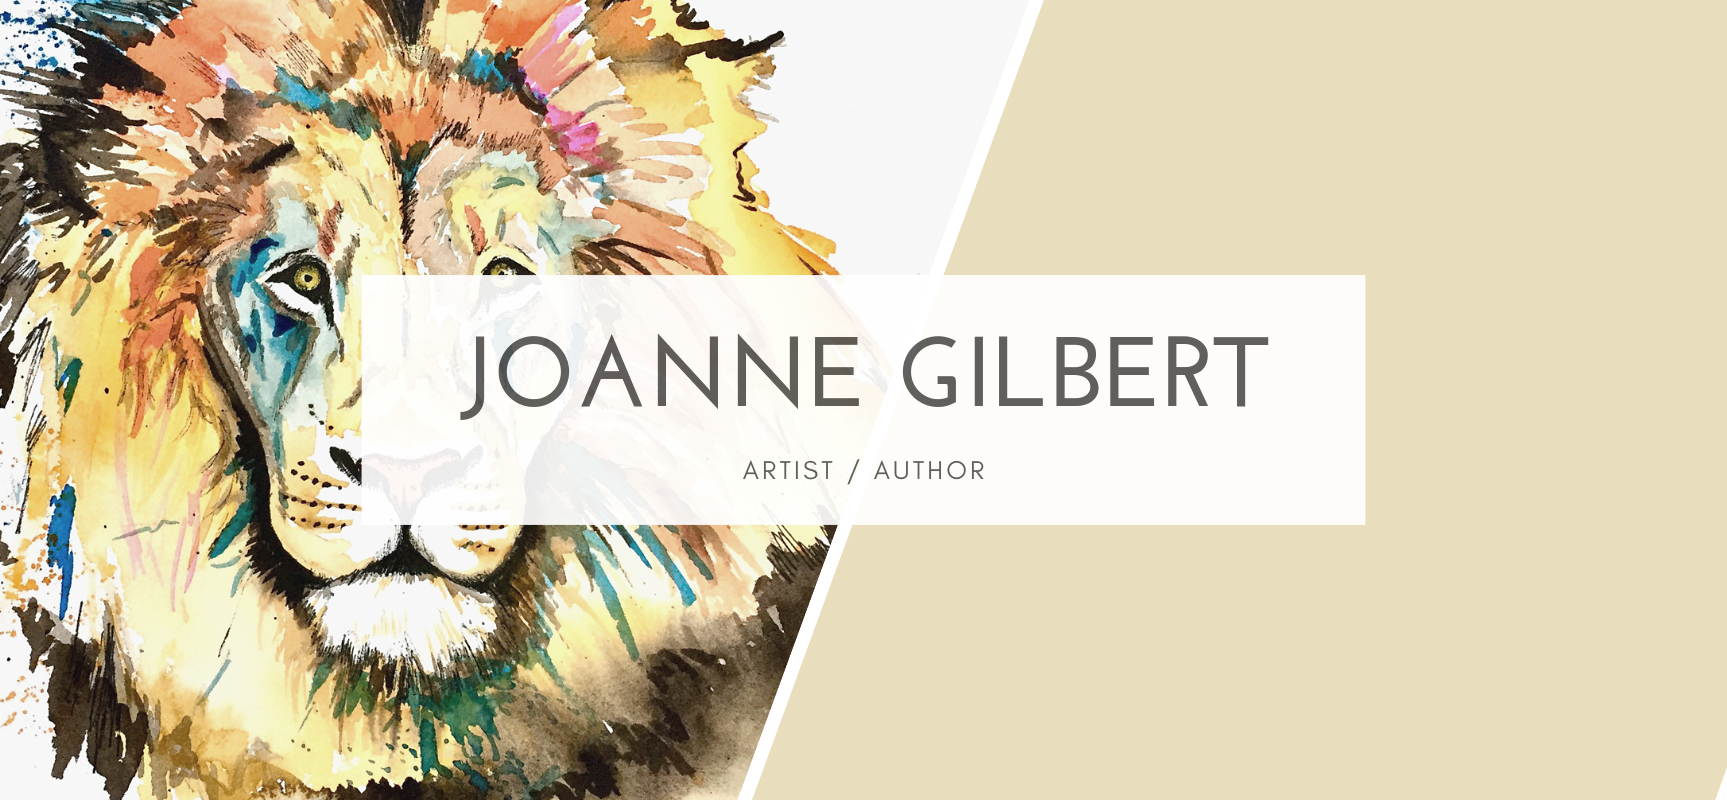 Joanne Gilbert Artist